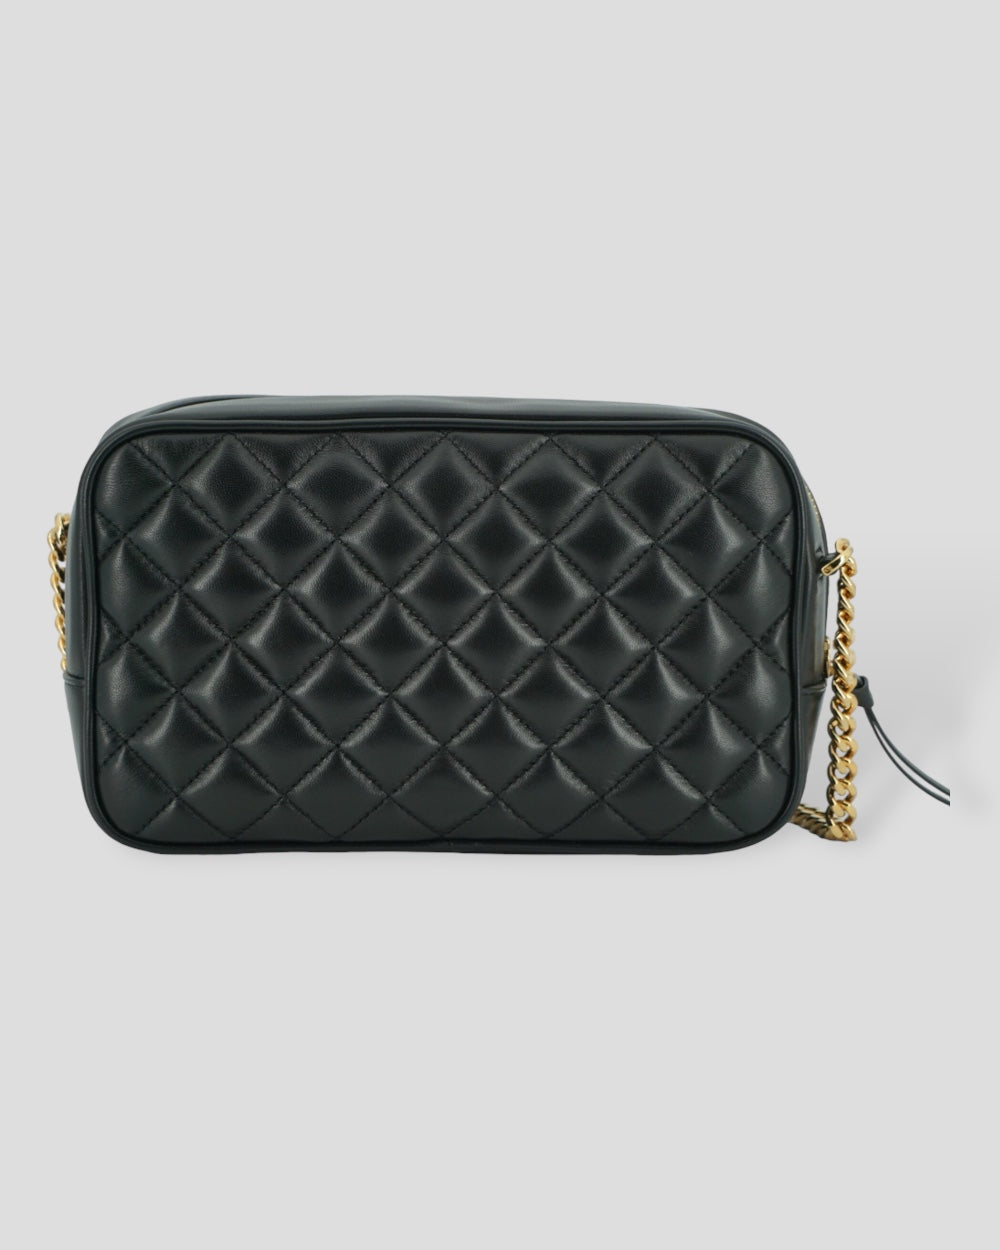 Versace Black Lamb Leather Medium Camera Shoulder Bag